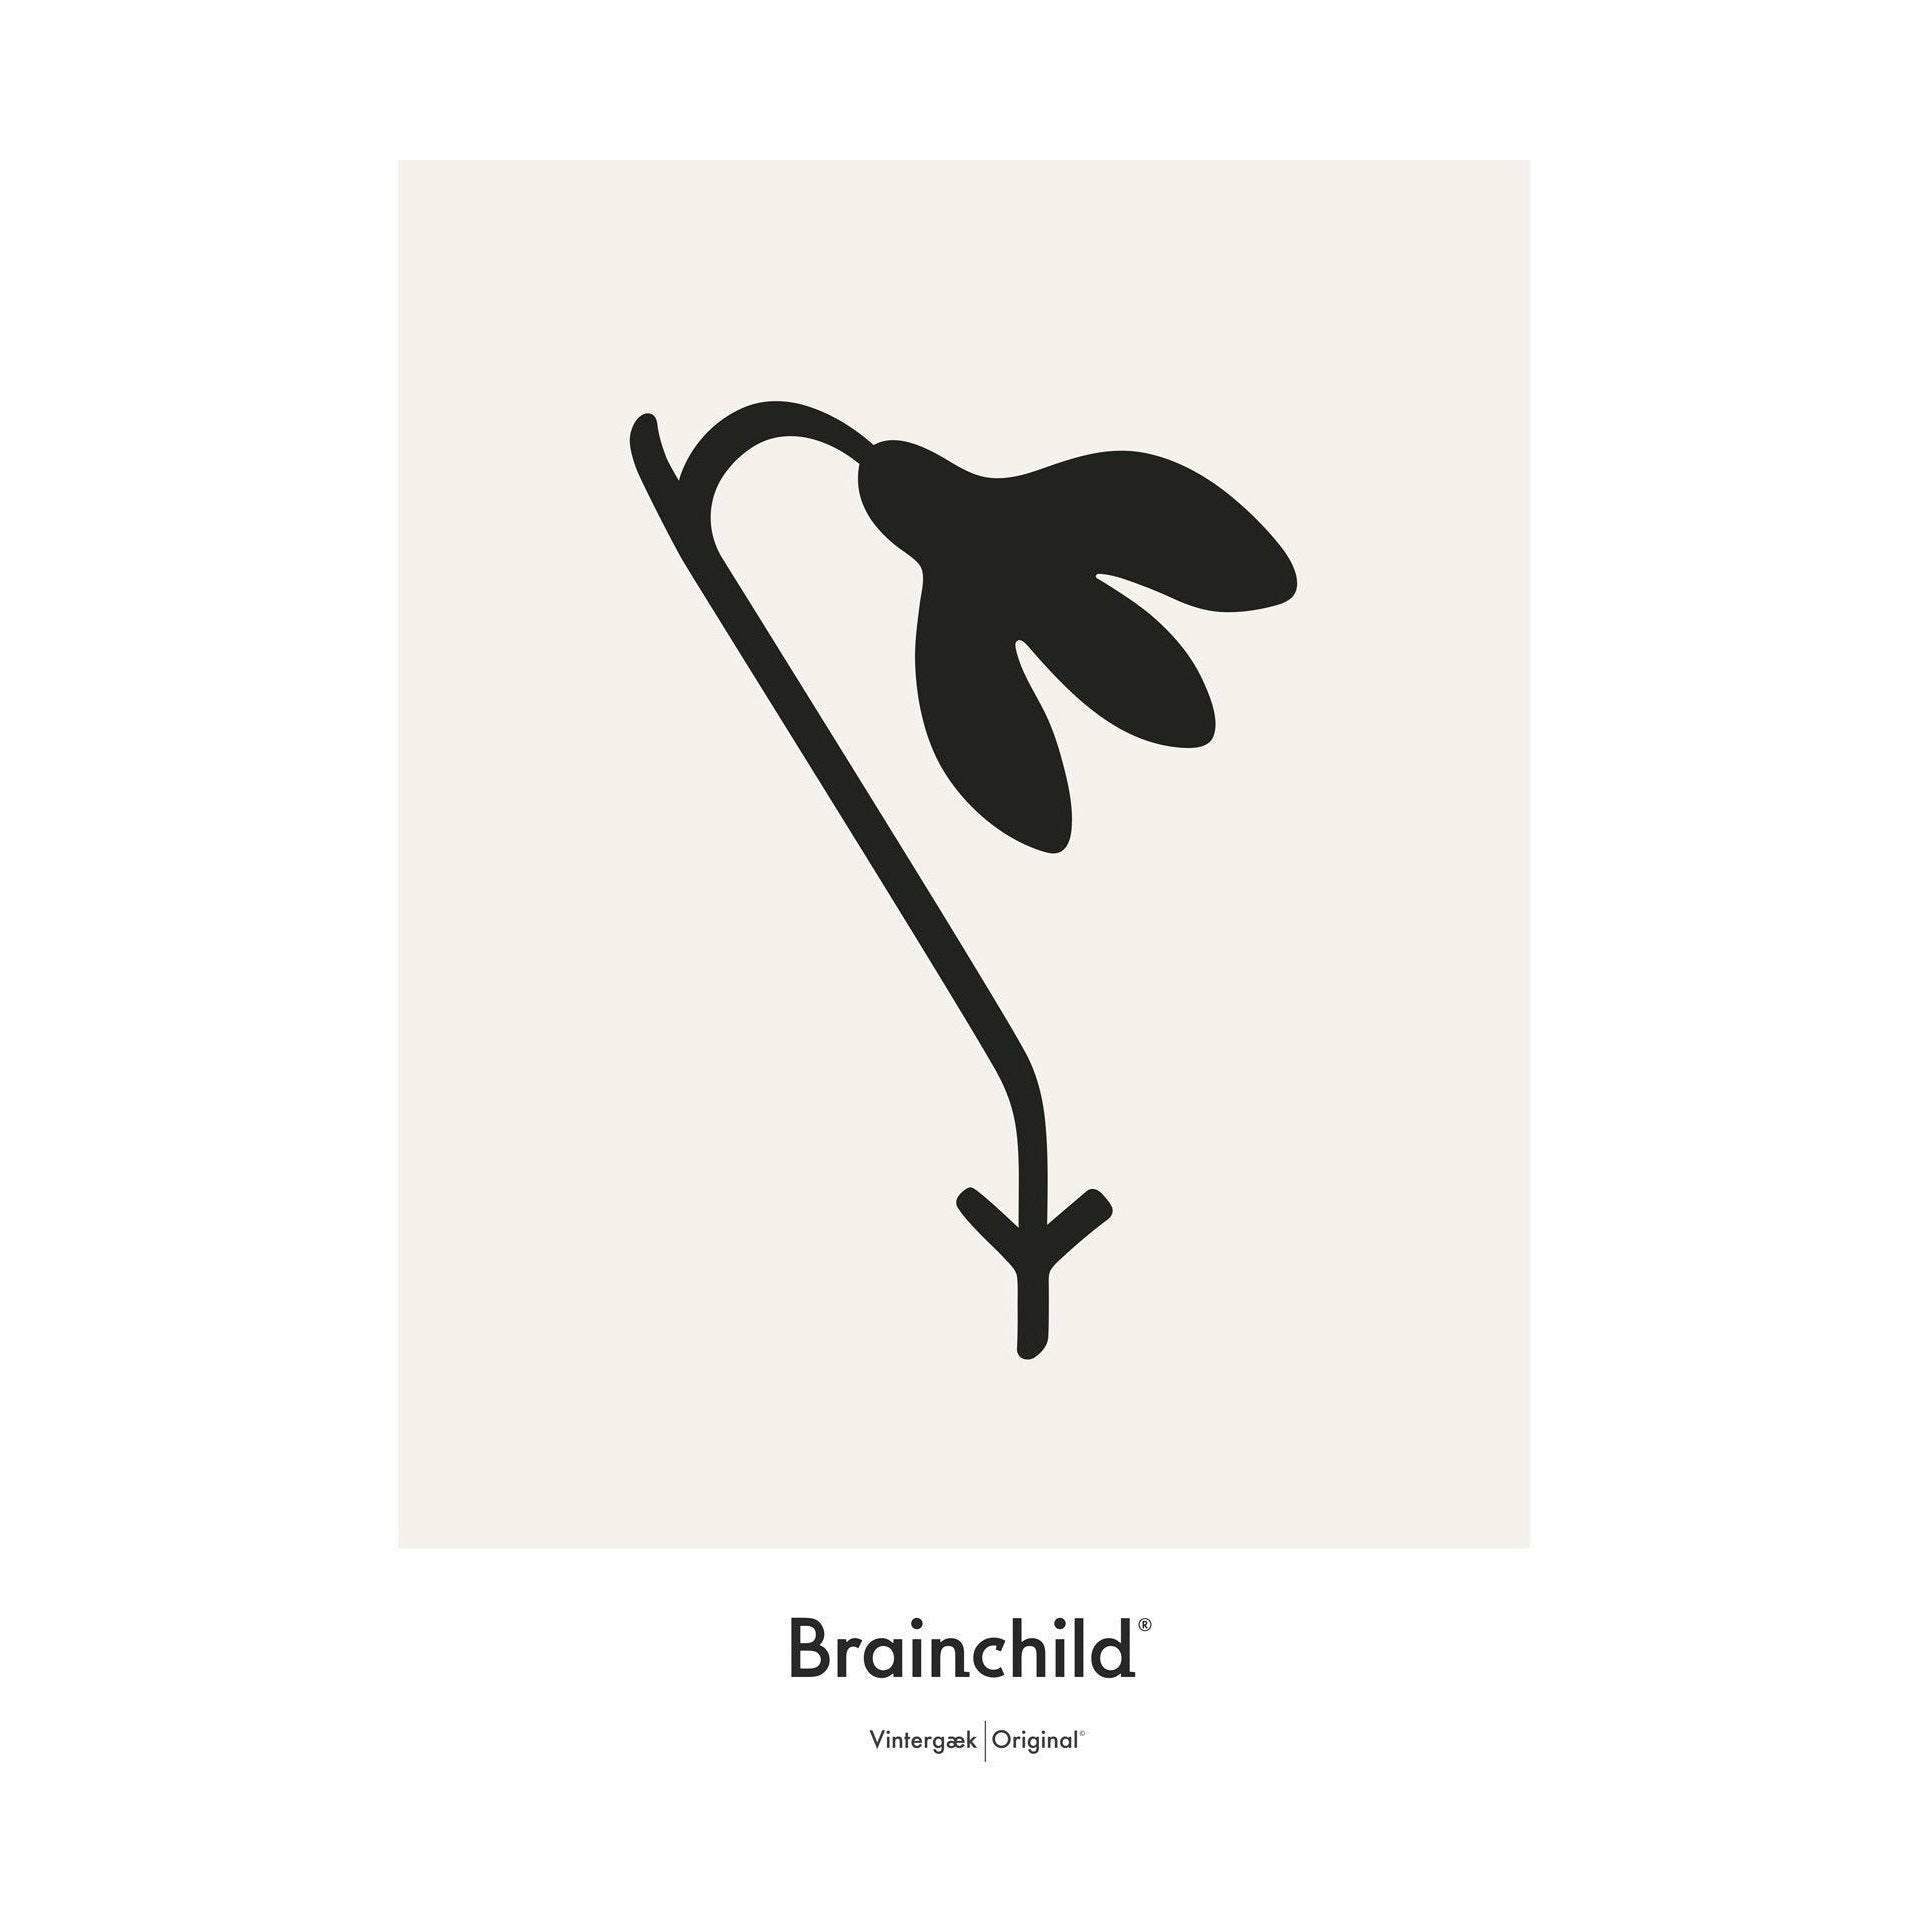 Brainchild Vintergästdesignikon Poster ingen ram 70x100 cm, grå